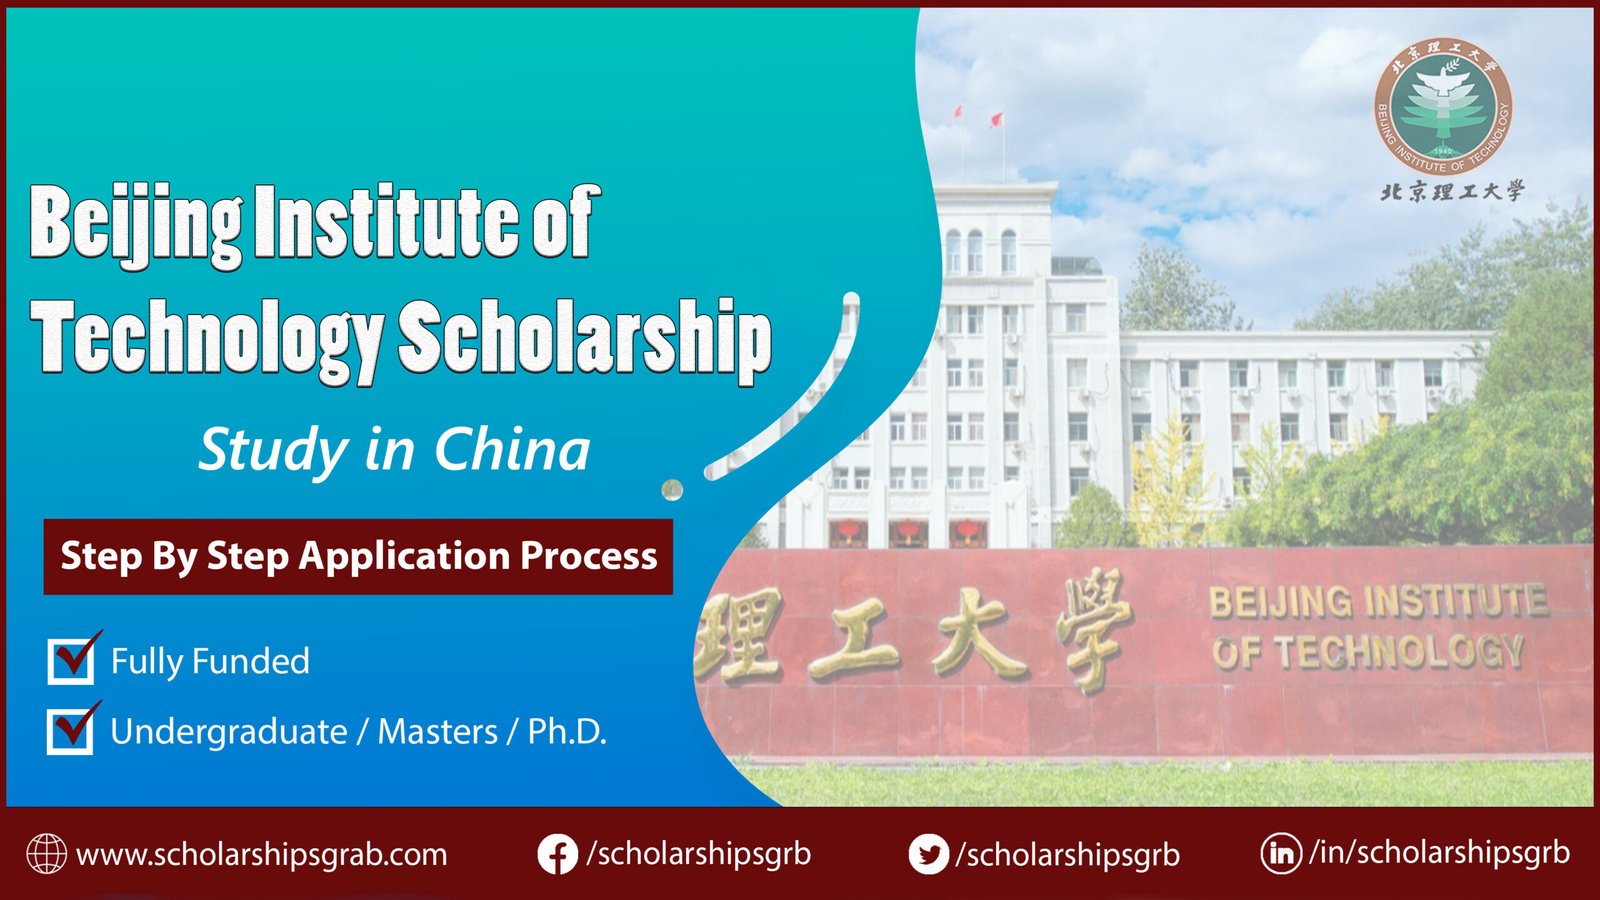 Beijing Institute of Technology Scholarships